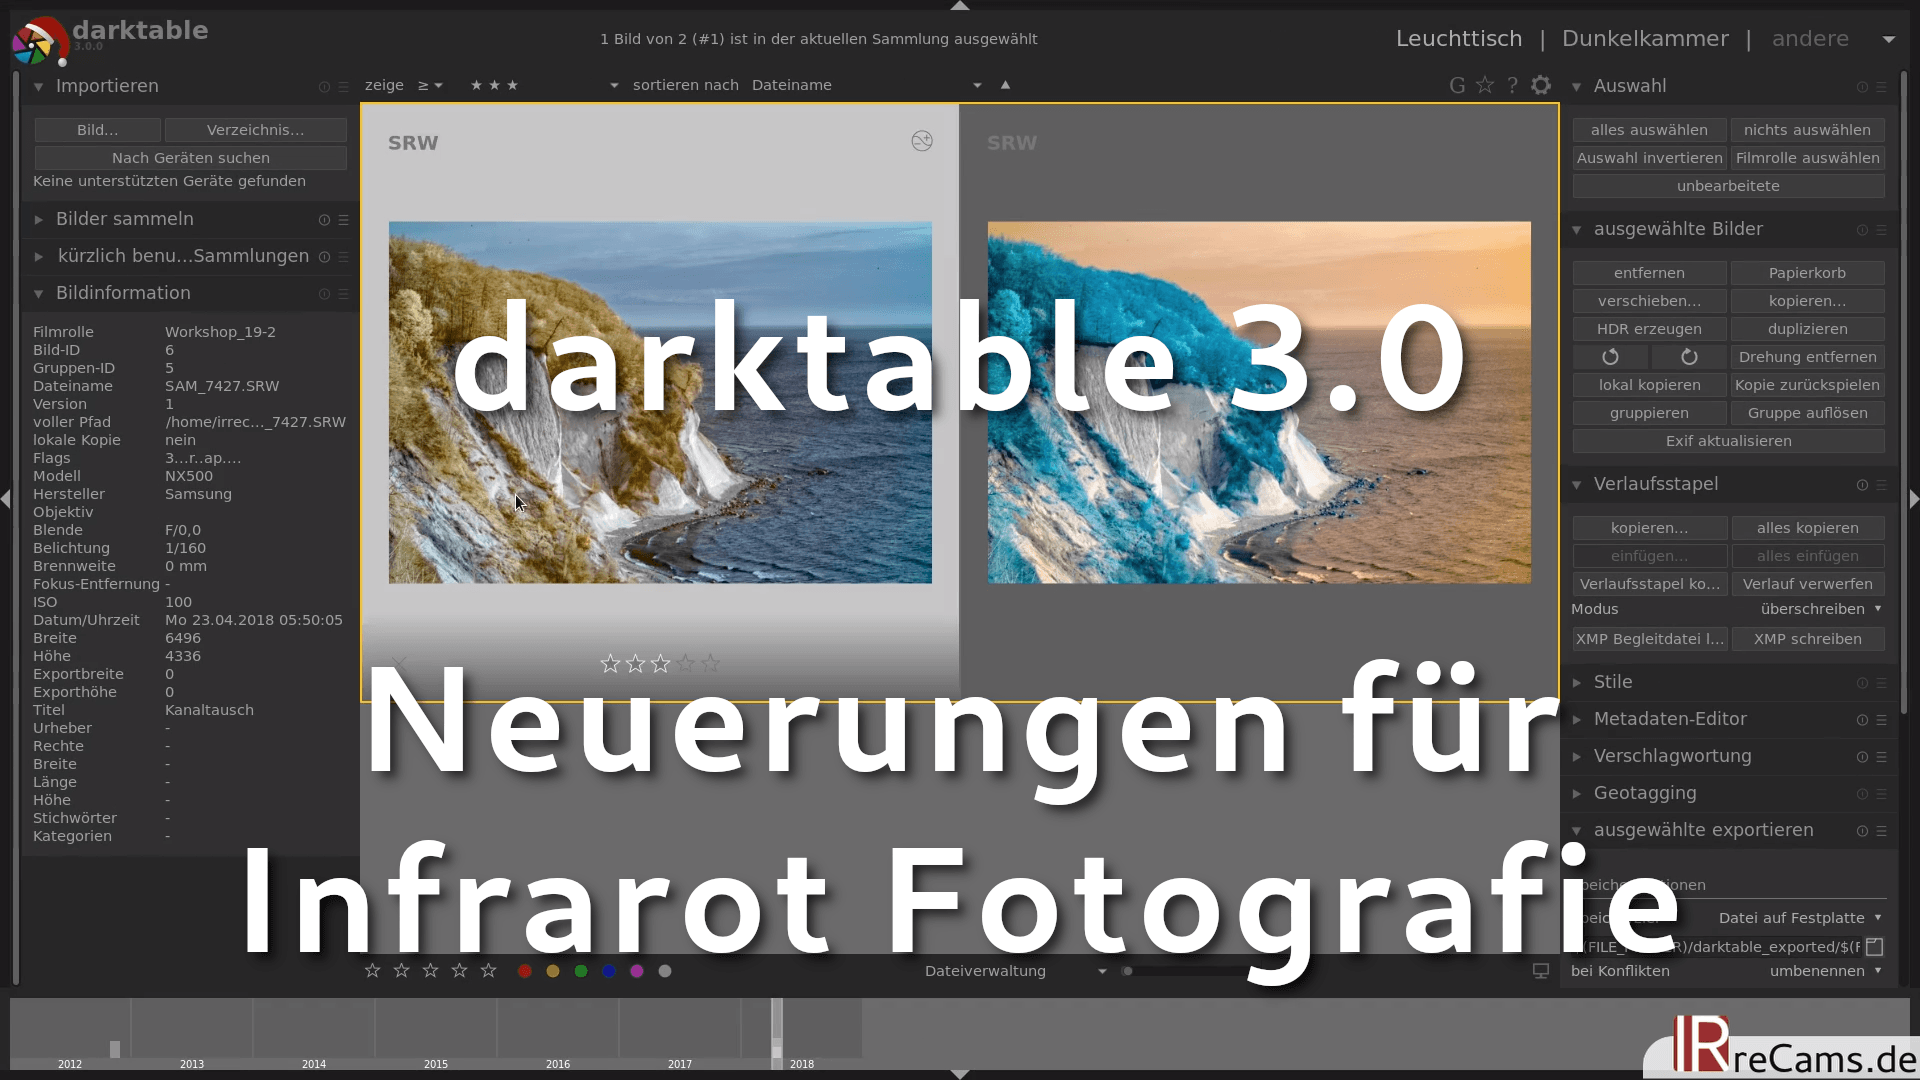 Infrarot Bildbearbeitung in darktable 3.0